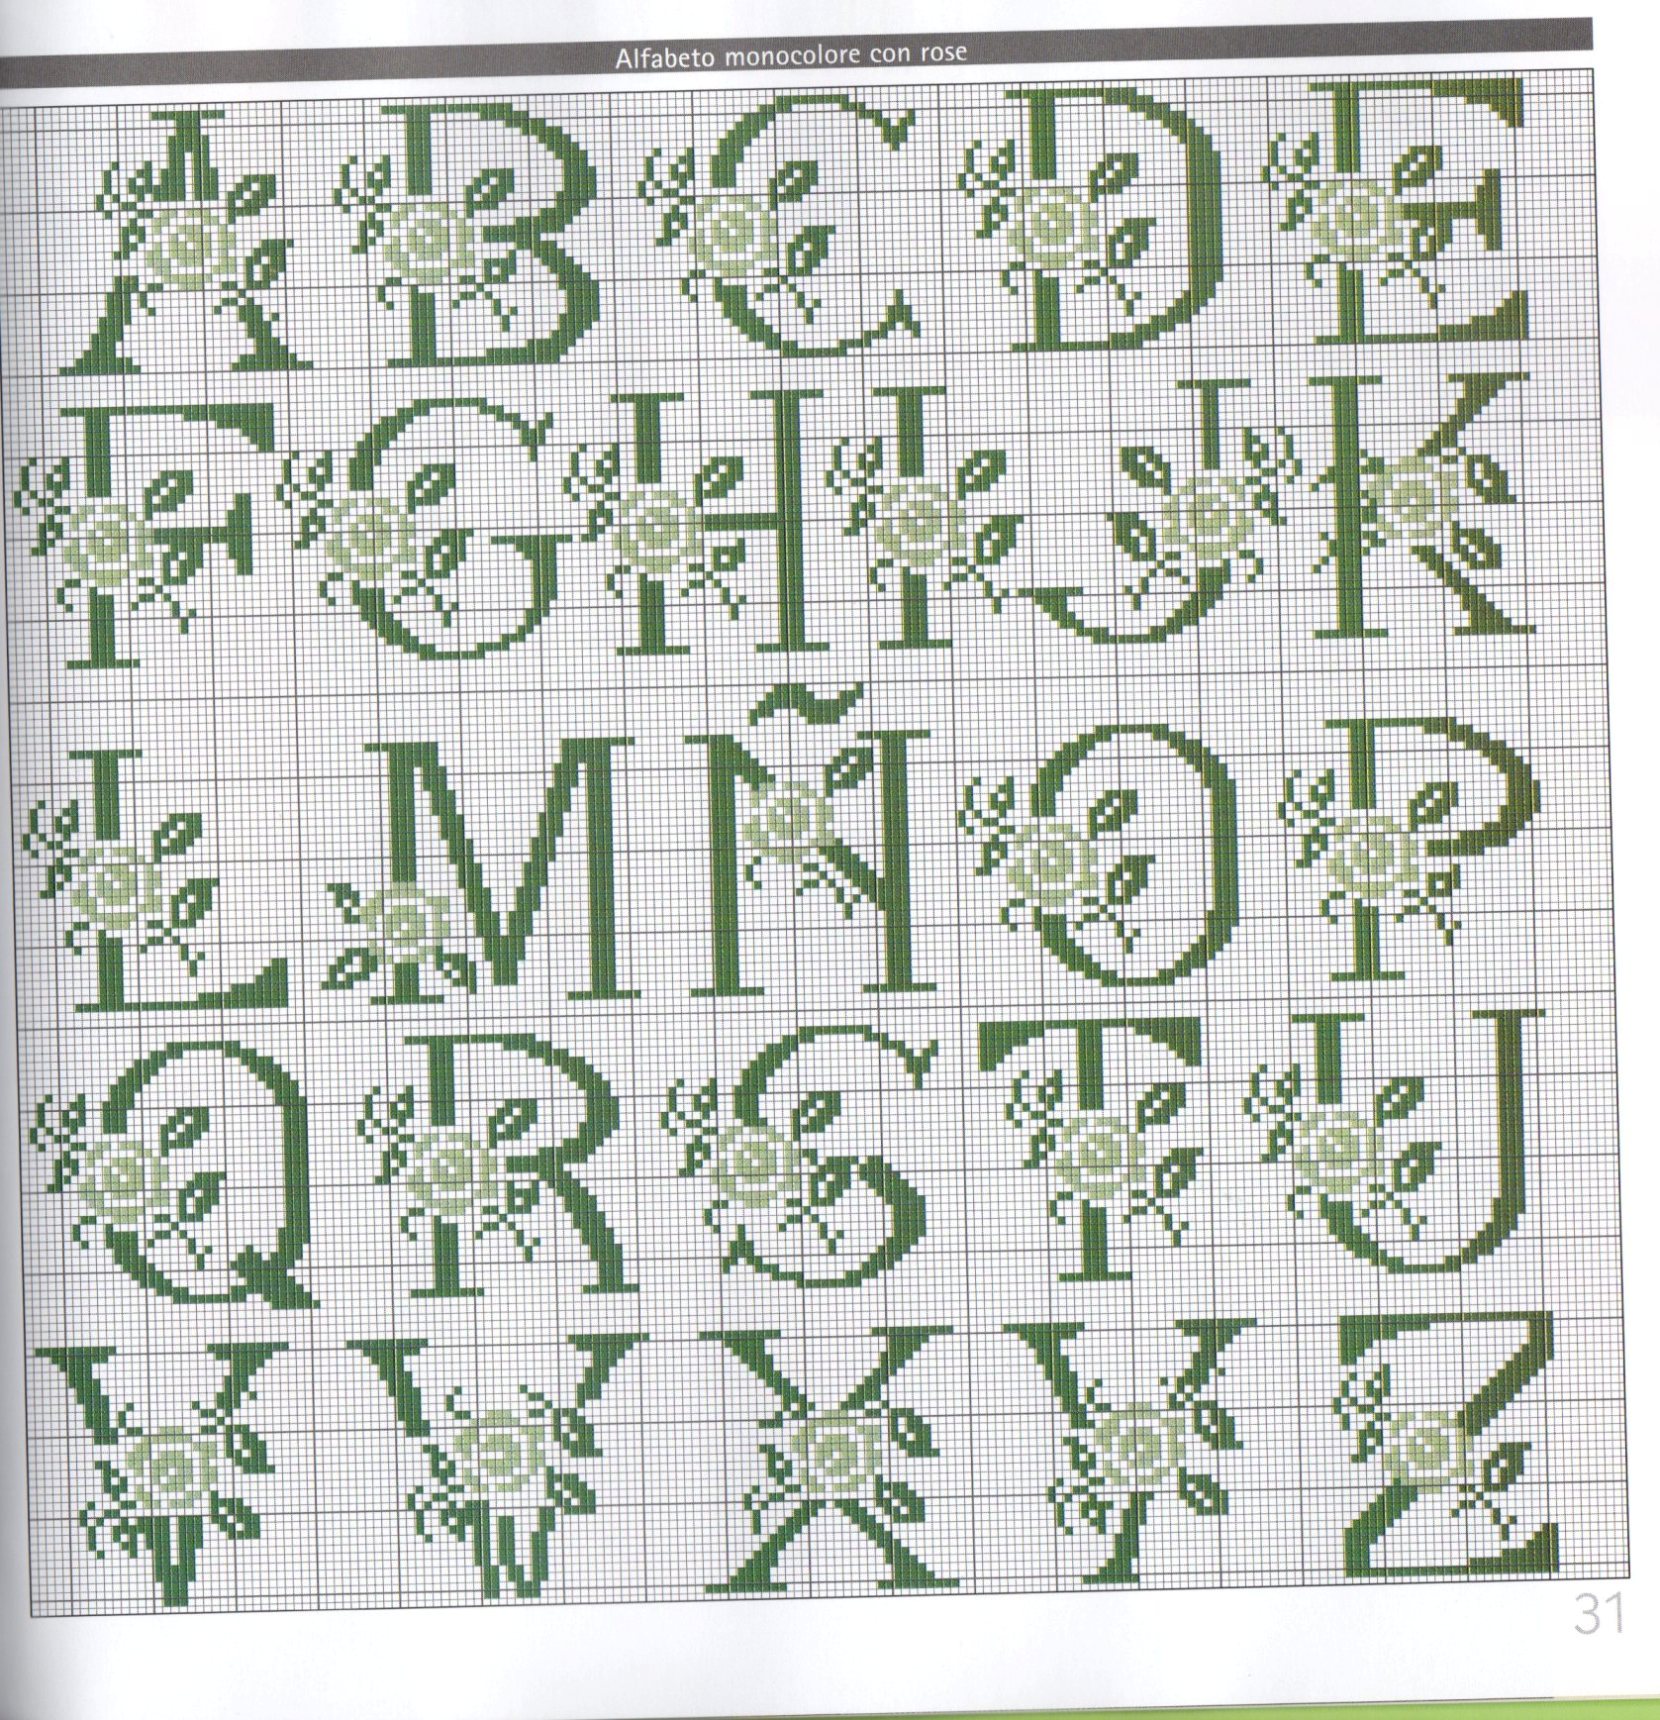 Monochrome alphabet with roses